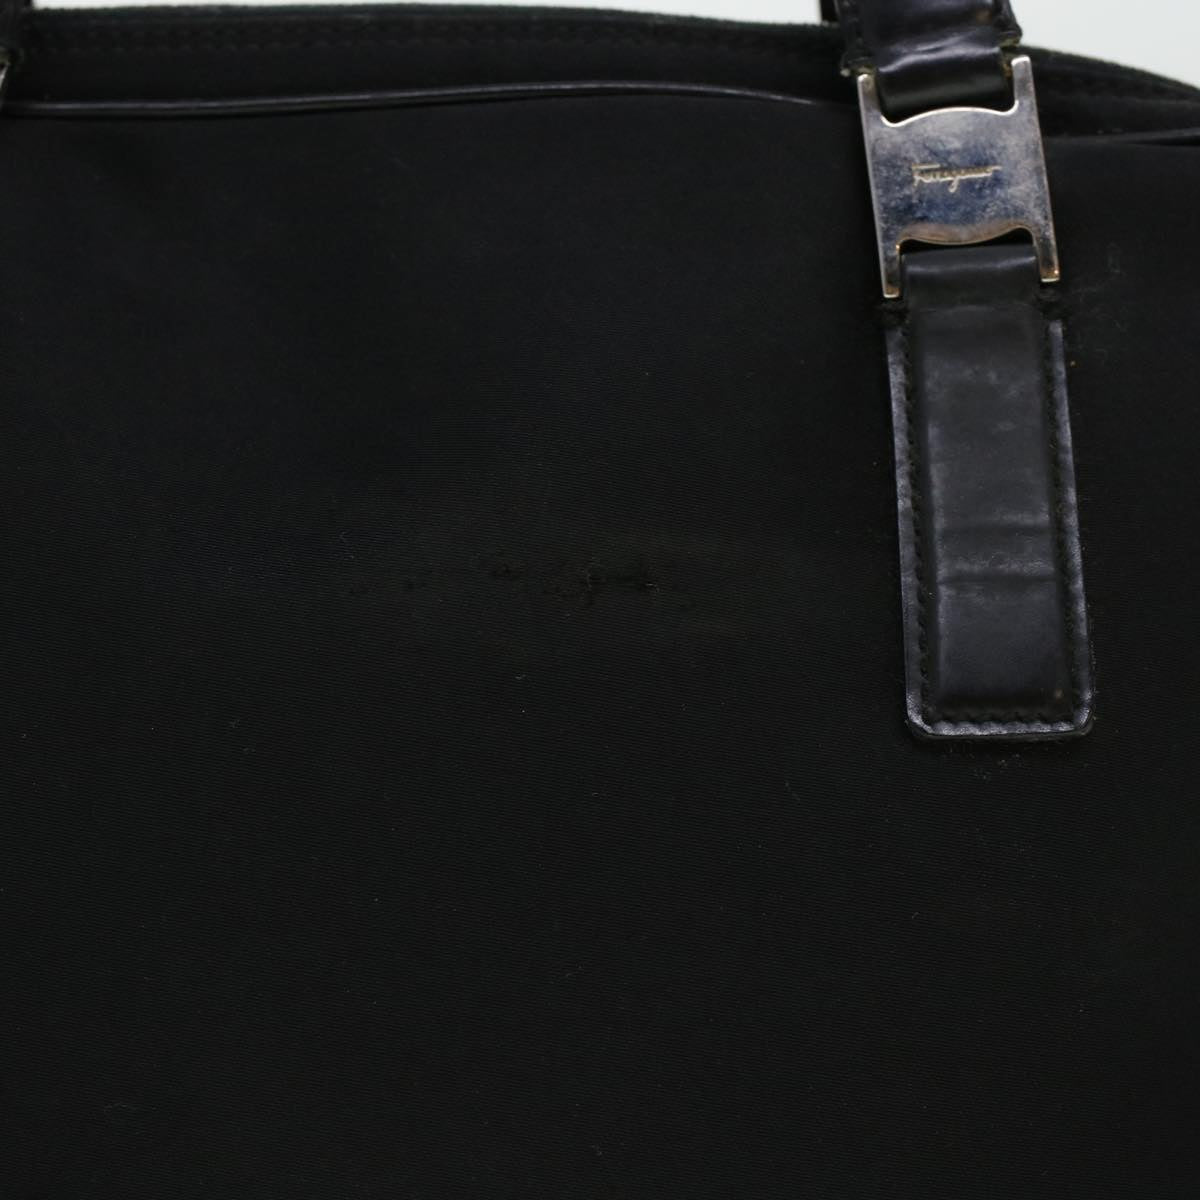 Salvatore Ferragamo Hand Bag Nylon Black Auth cl500